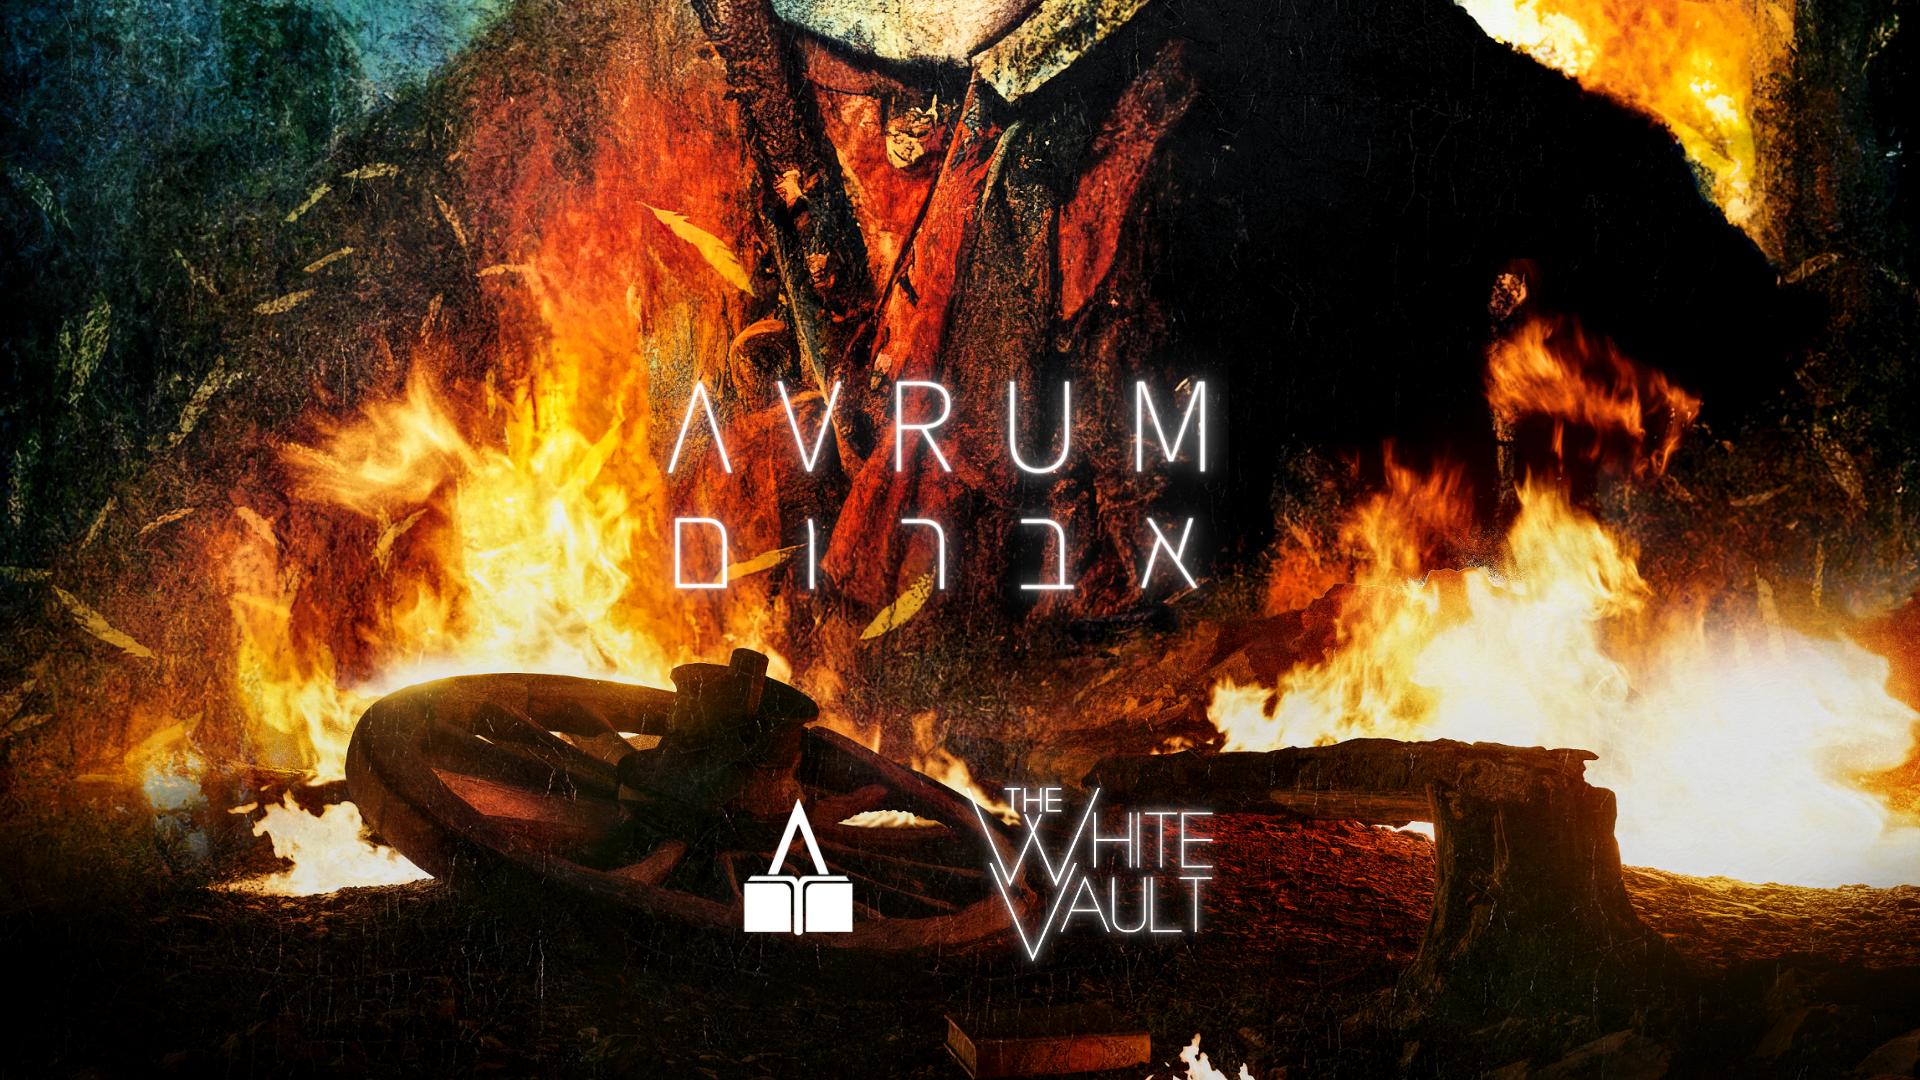 The White Vault: Avrum